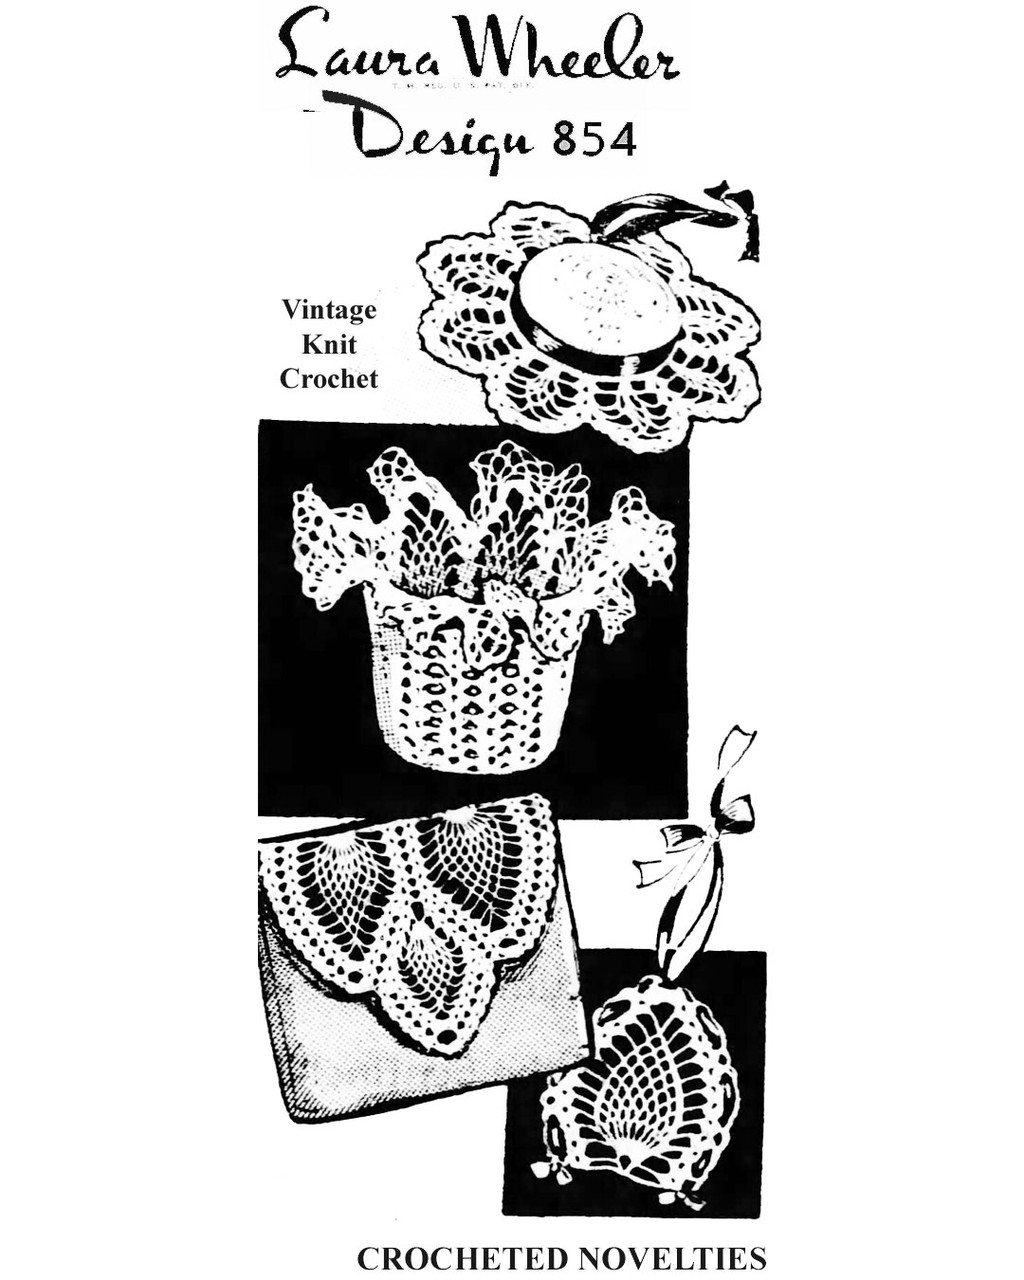 Crochet Pineapple Accessories Pattern Mail Order Design 854